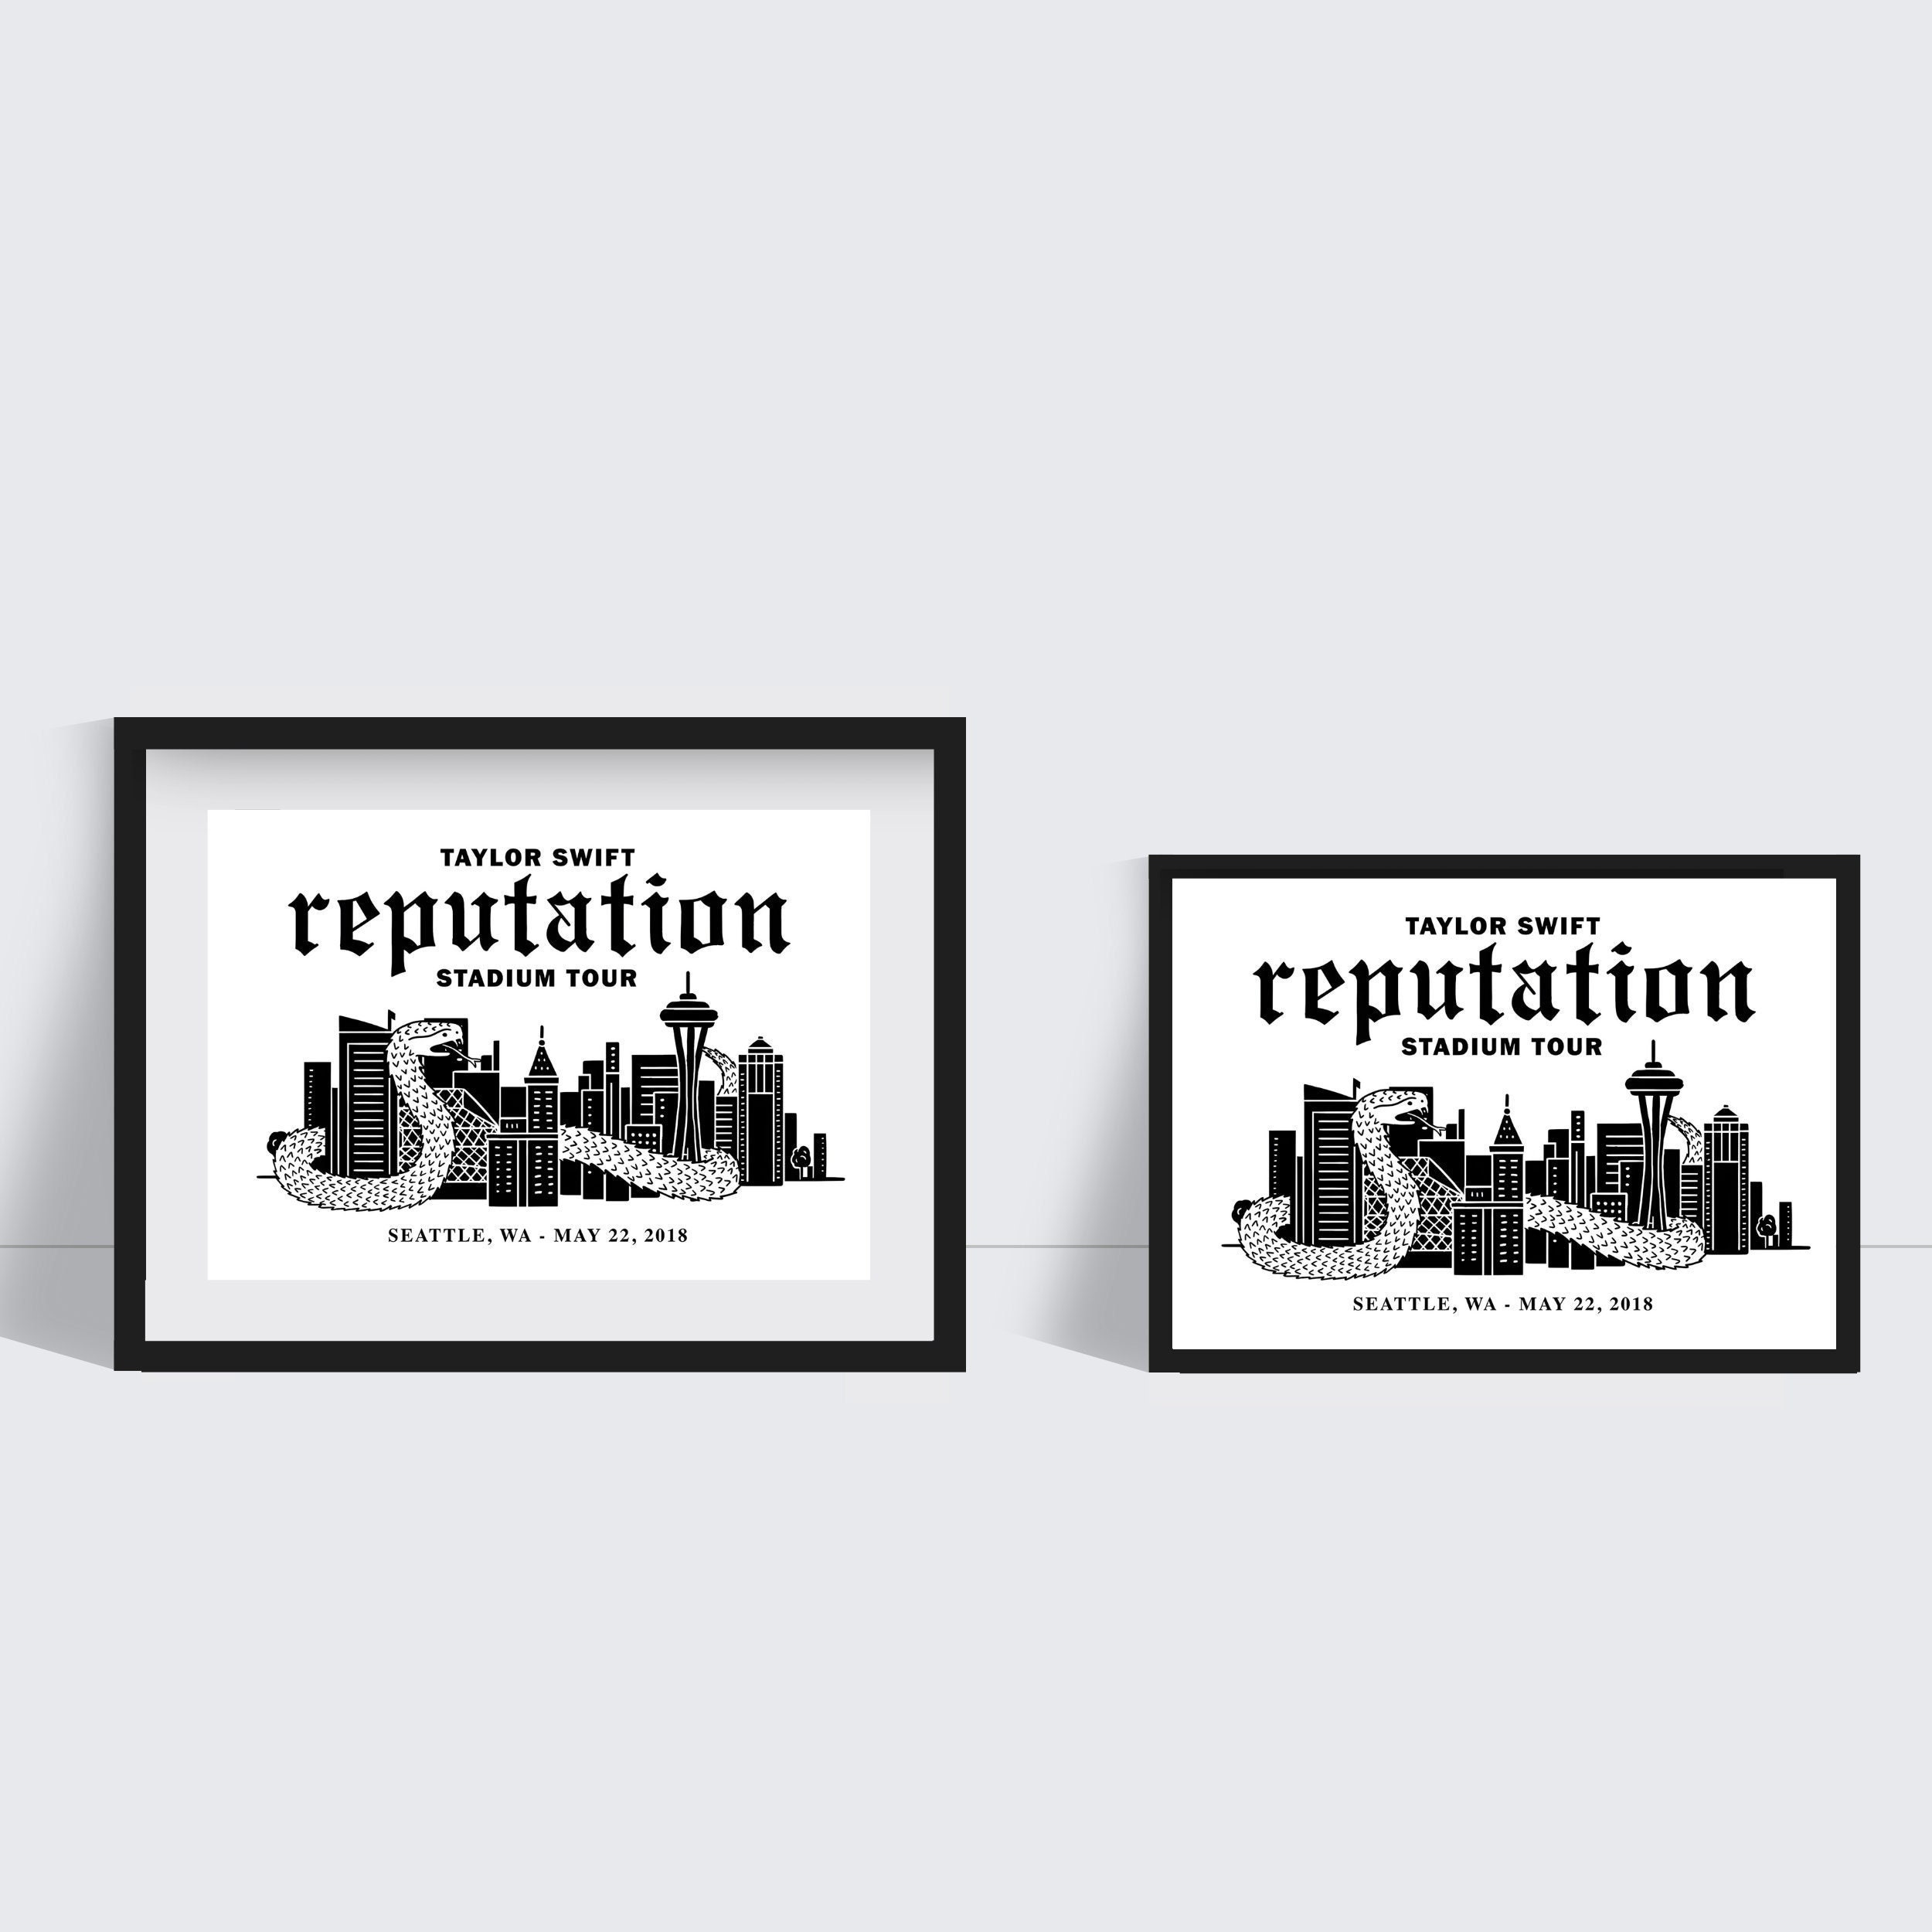 reputation (Dark Glitch Album Art) (Fan-Made) by NathanDS on